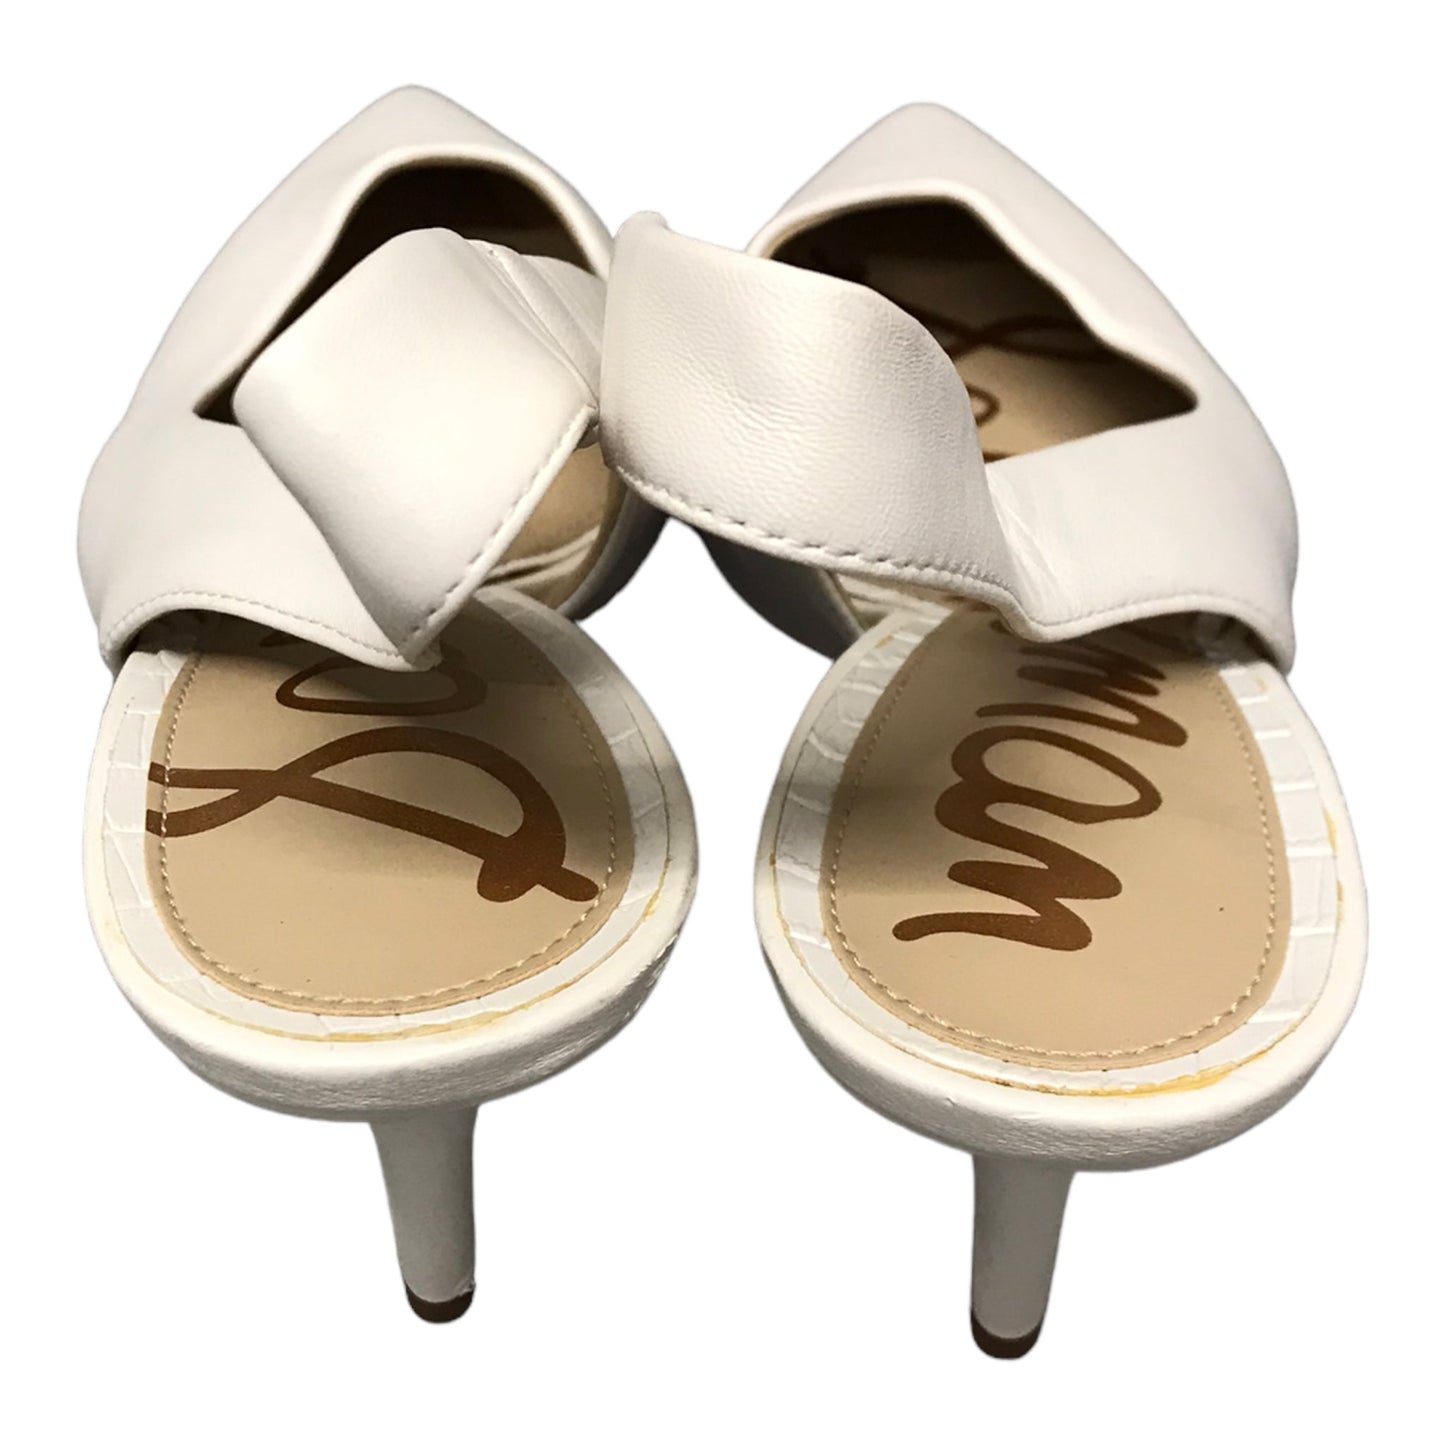 Shoes Heels Stiletto By Sam Edelman  Size: 9.5